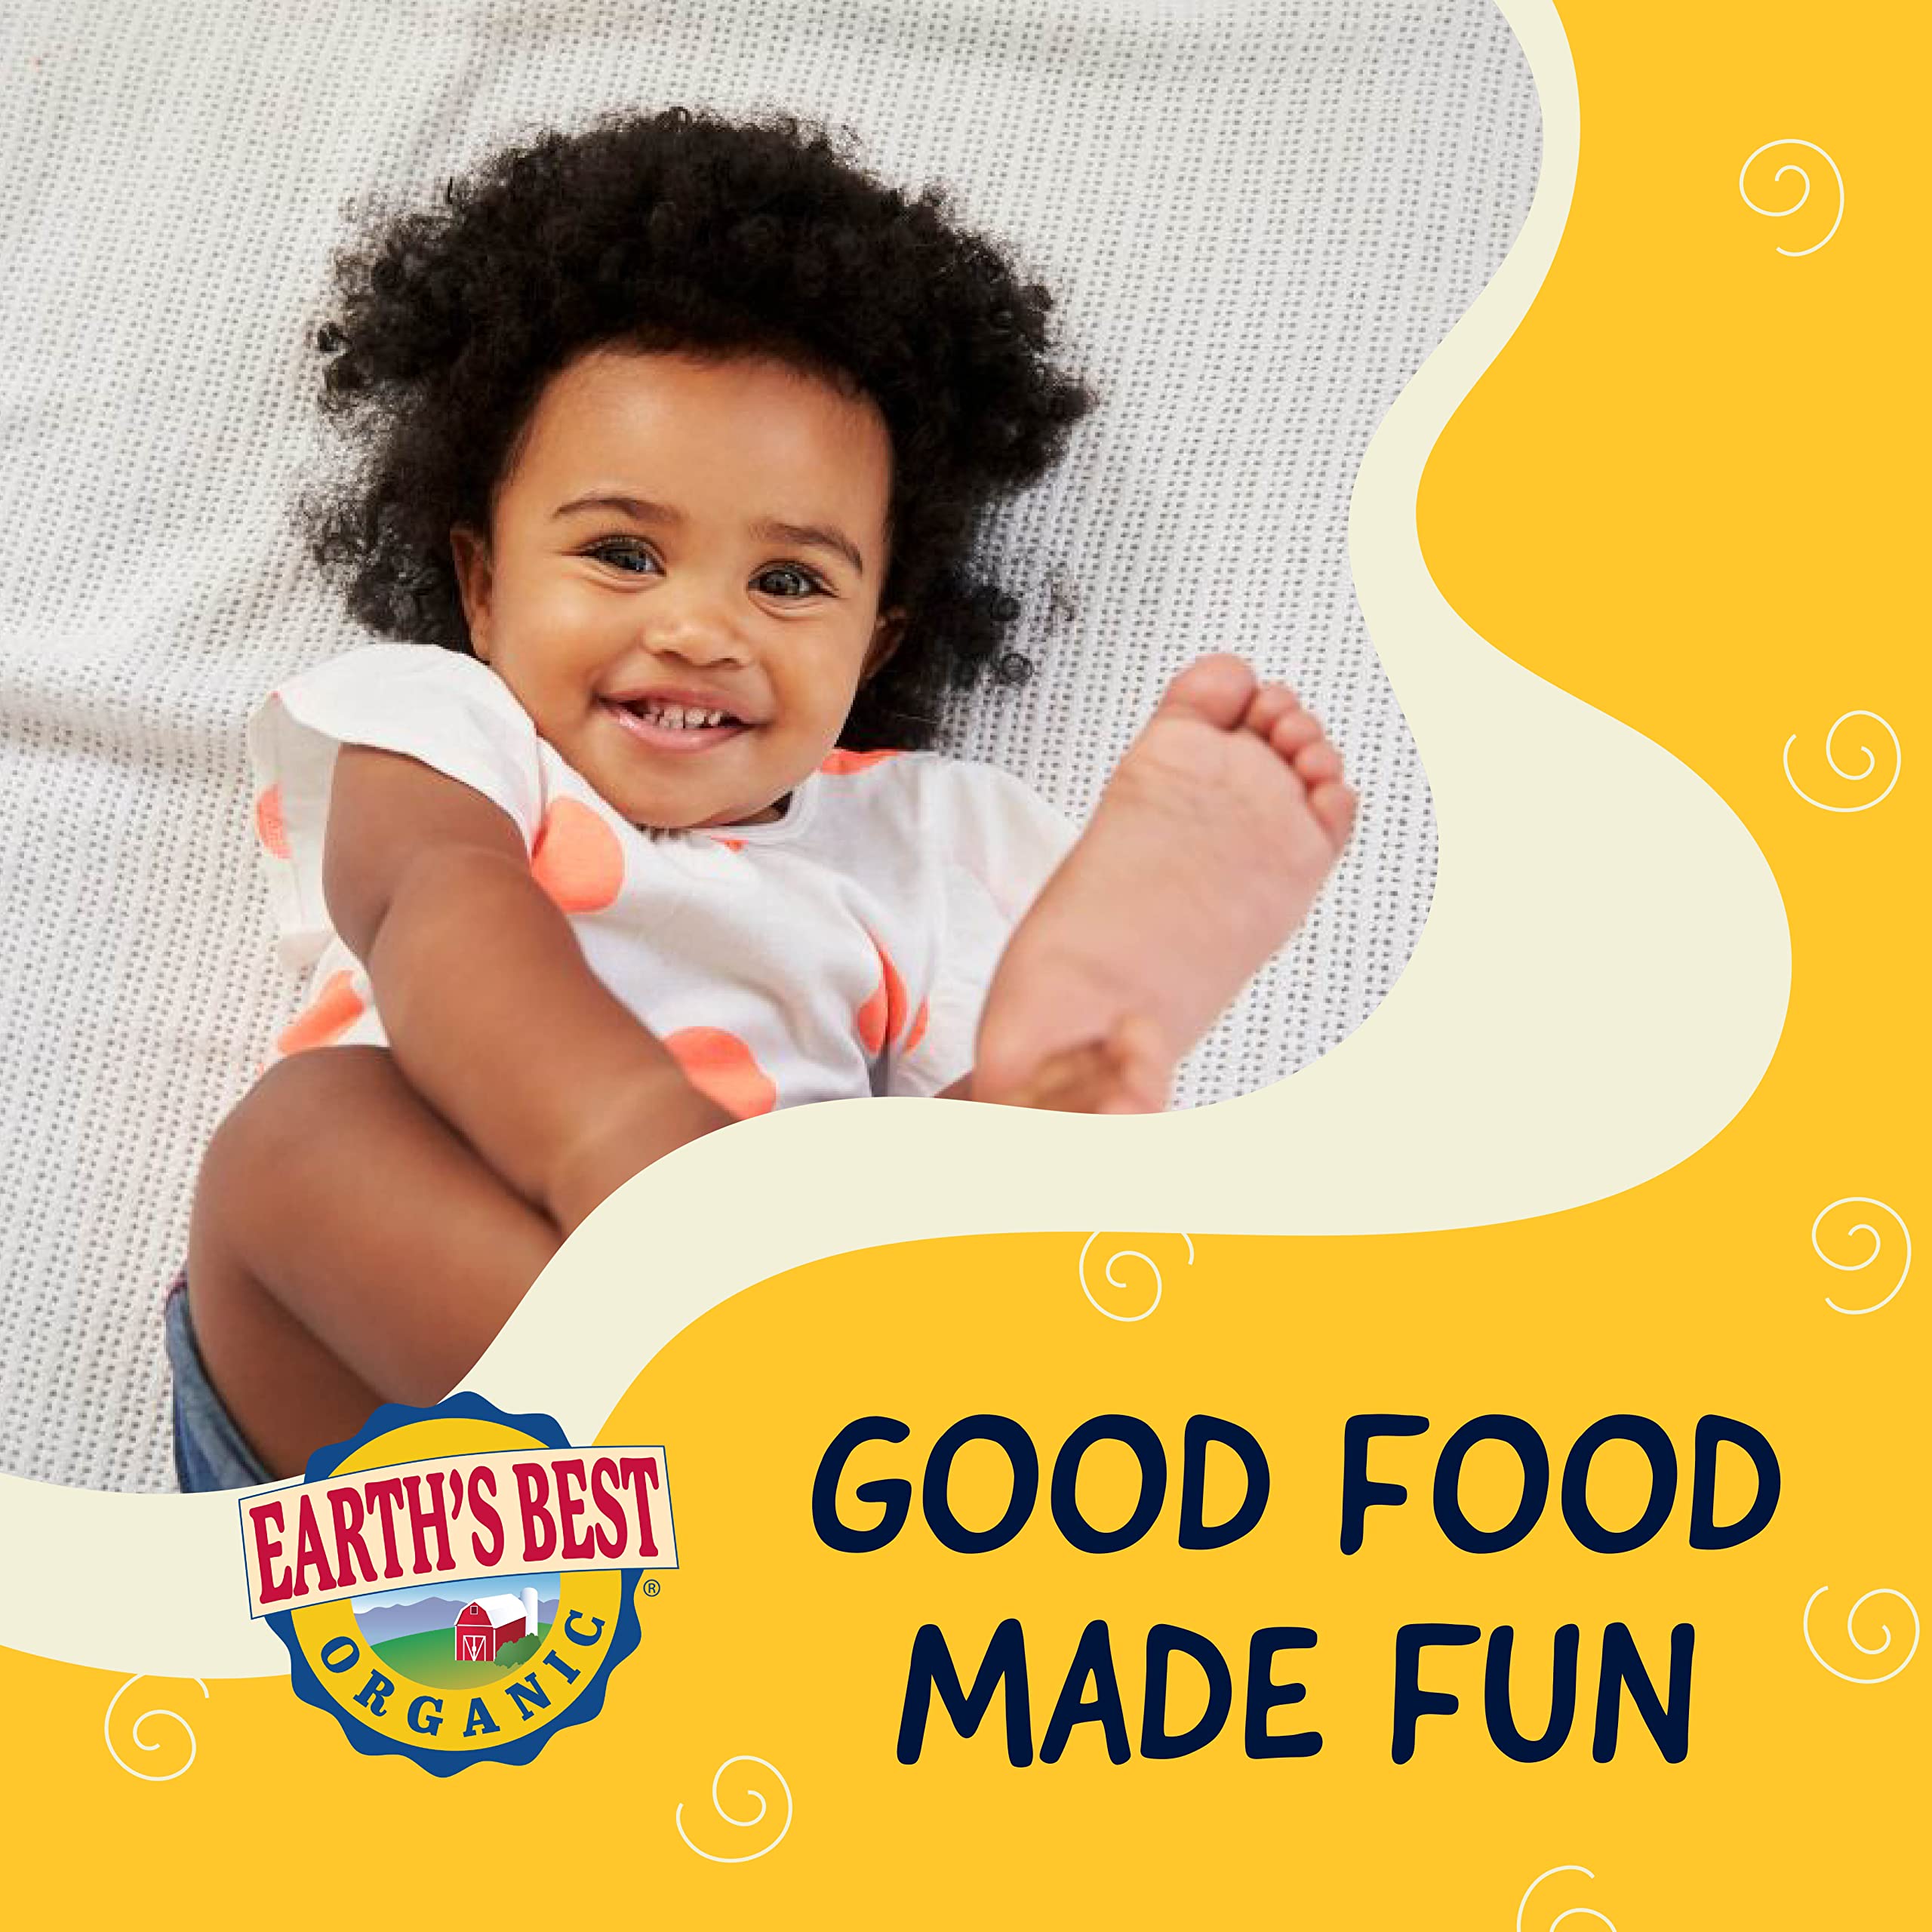 Earth's Best Organic Kids Snacks, Sesame Street Toddler Snacks, Organic Cheddar Veggie Puffs, Gluten Free Snacks for Kids 2 Years and Older, Cheddar, 1.55 oz Bag (Pack of 3)